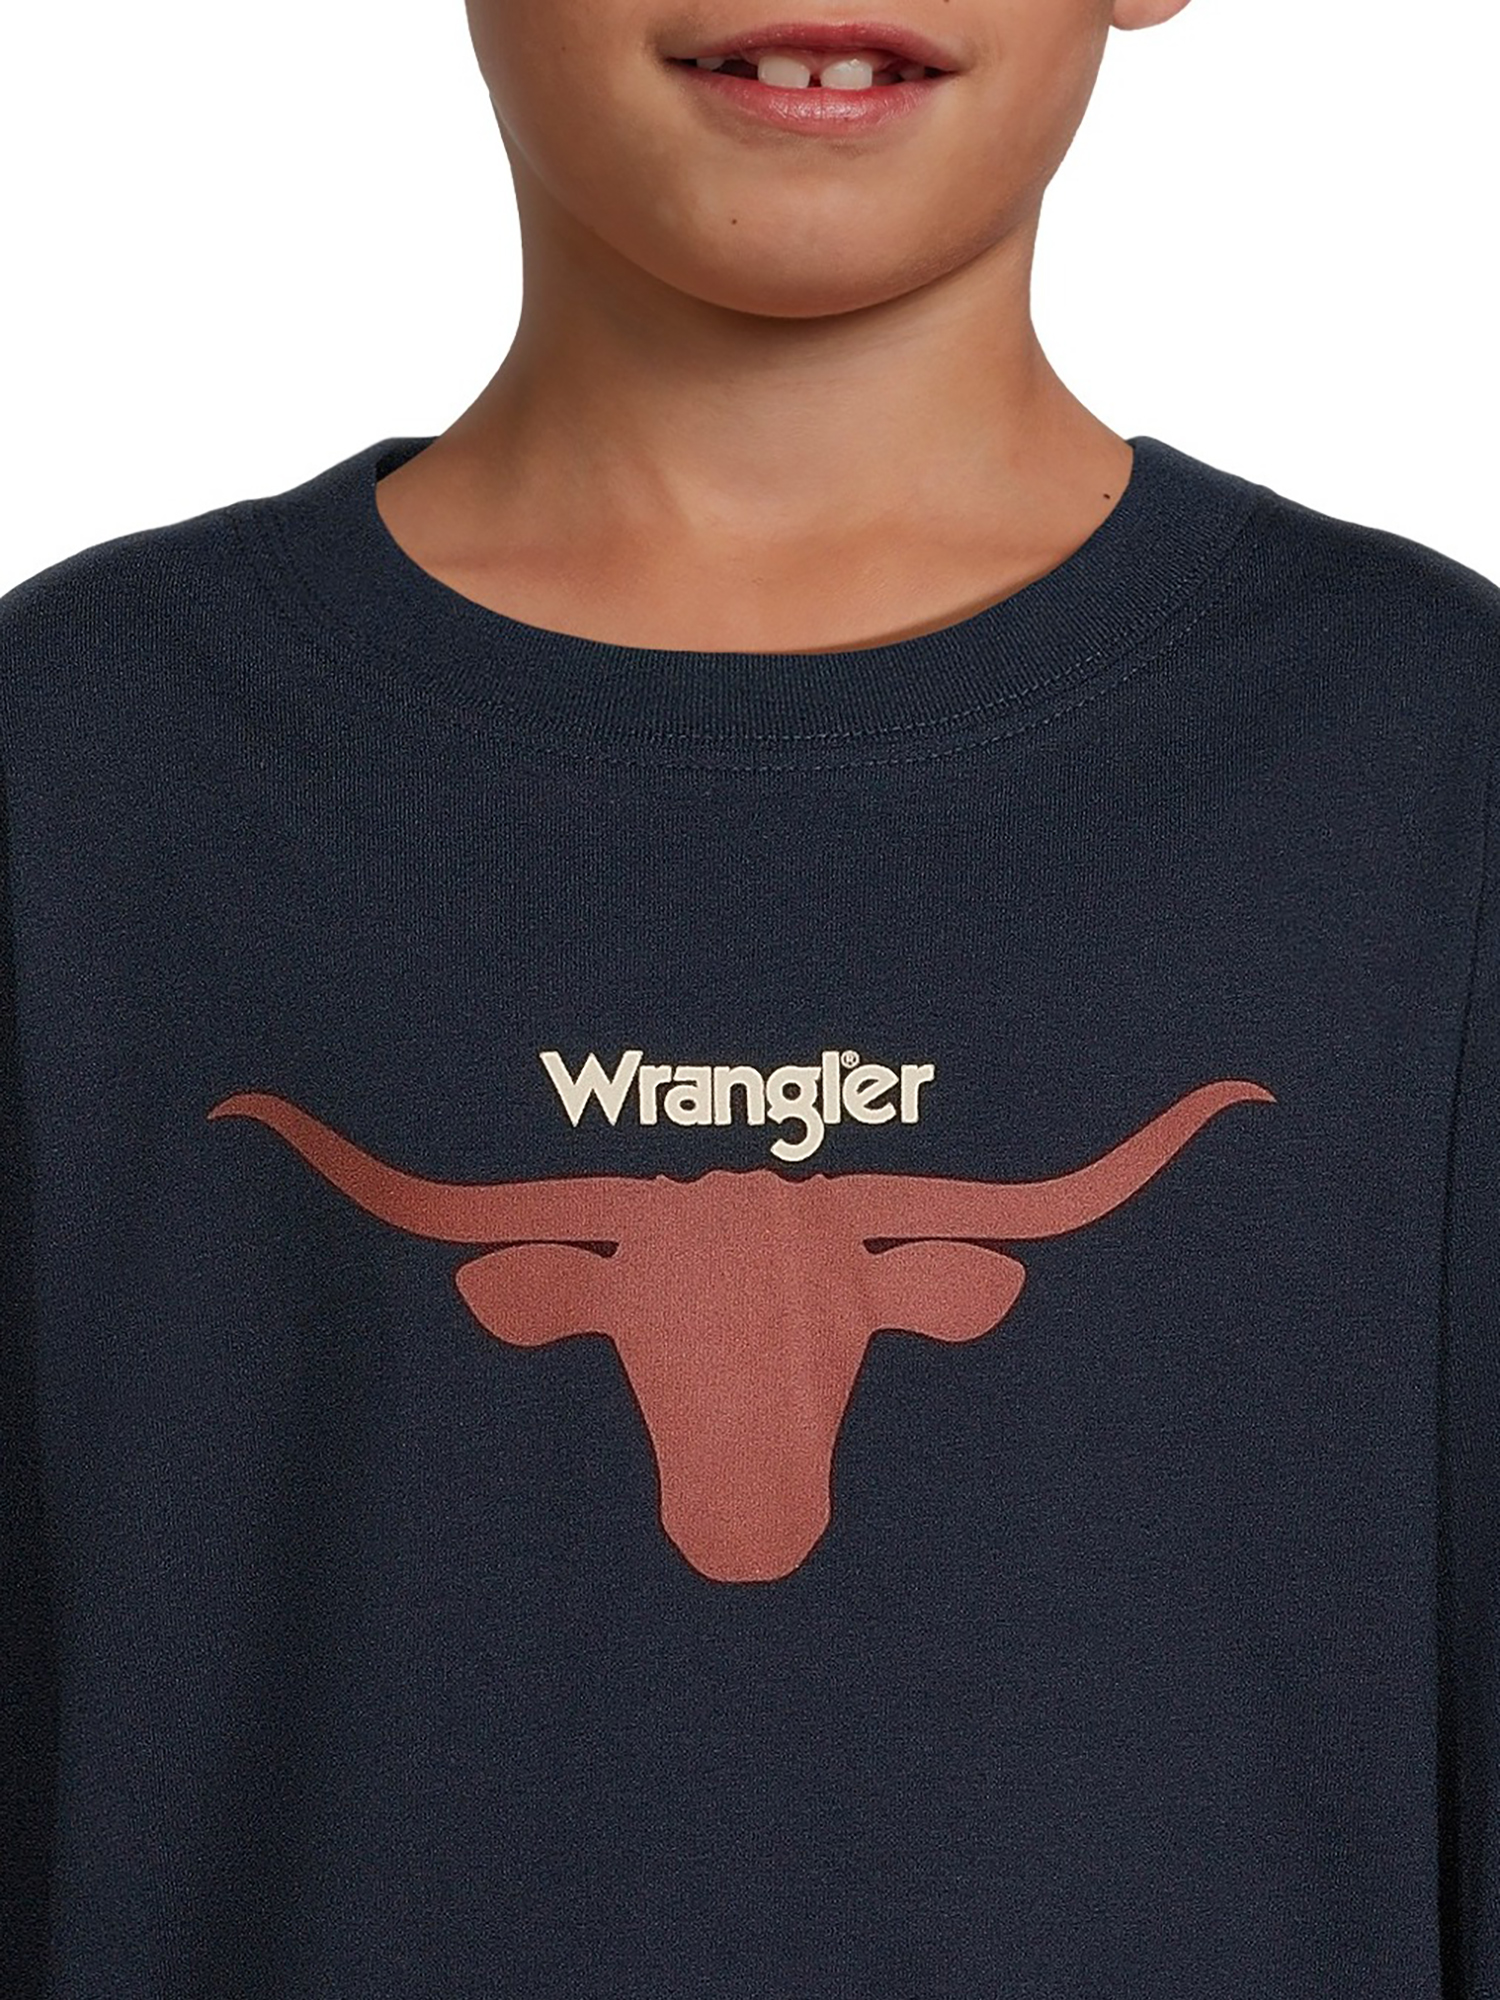 Wrangler Boys Long Sleeve Raglan and Graphic Tee, 2-Pack, Sizes 4-18 & Husky - image 5 of 5